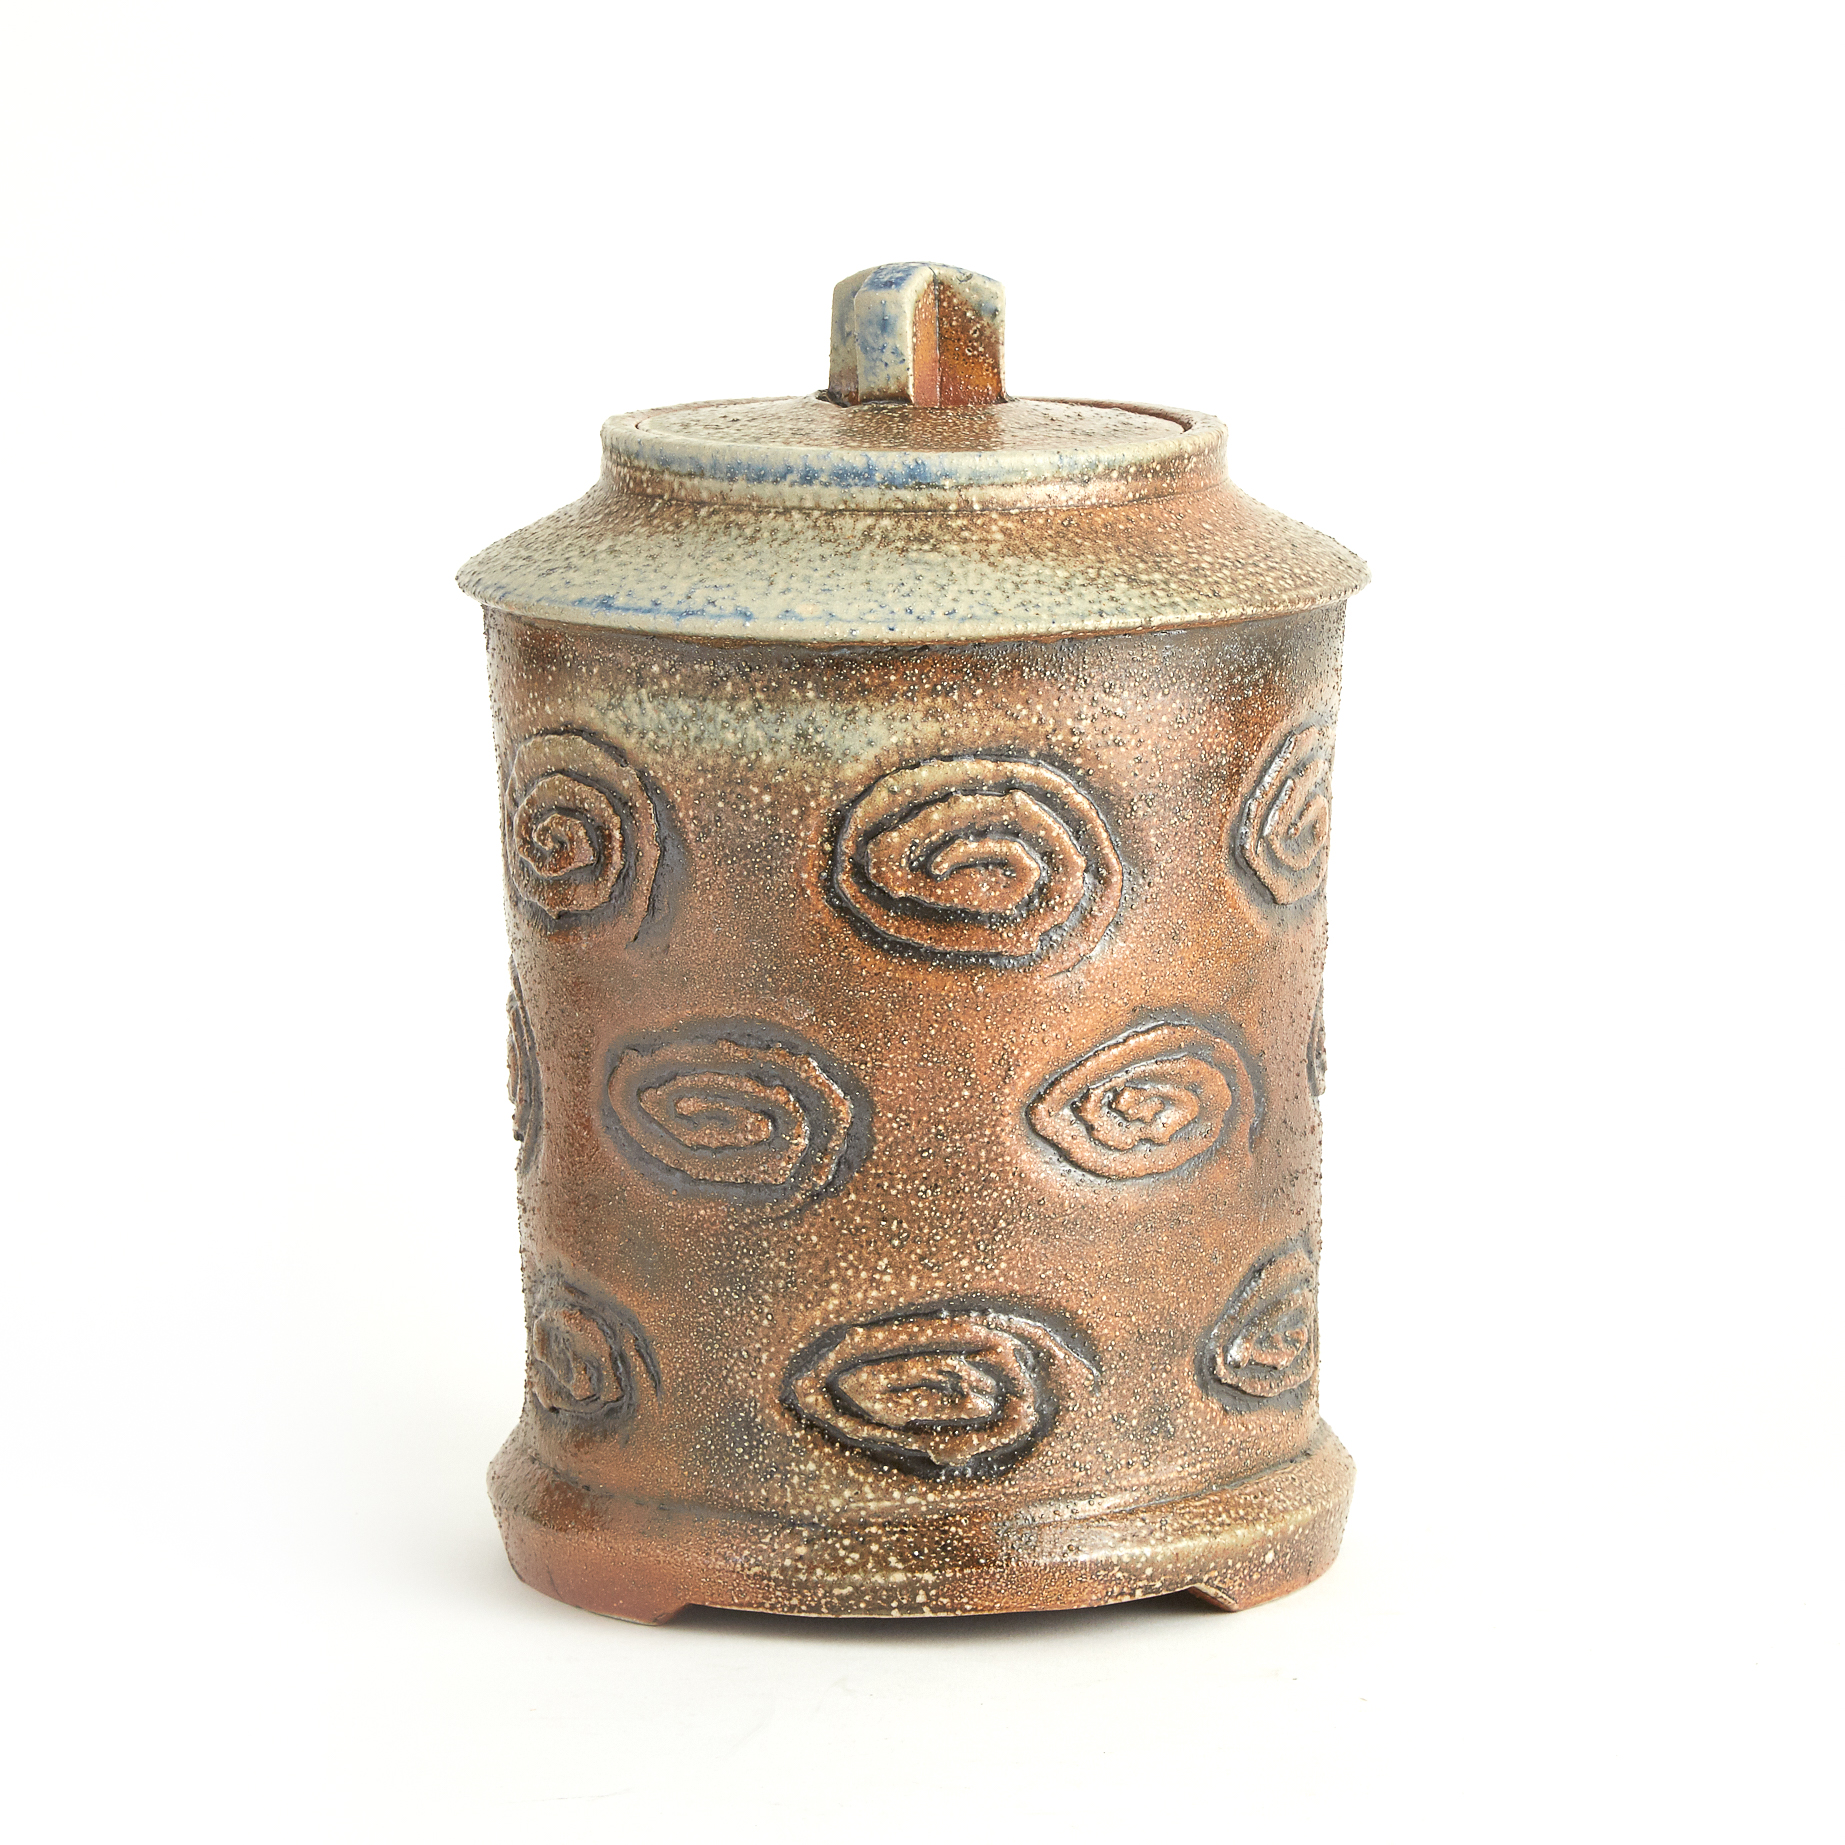 Bruce Cochrane (Canadian, b.1953), Mottled Brown Glazed Stoneware Covered Jar, c.2010